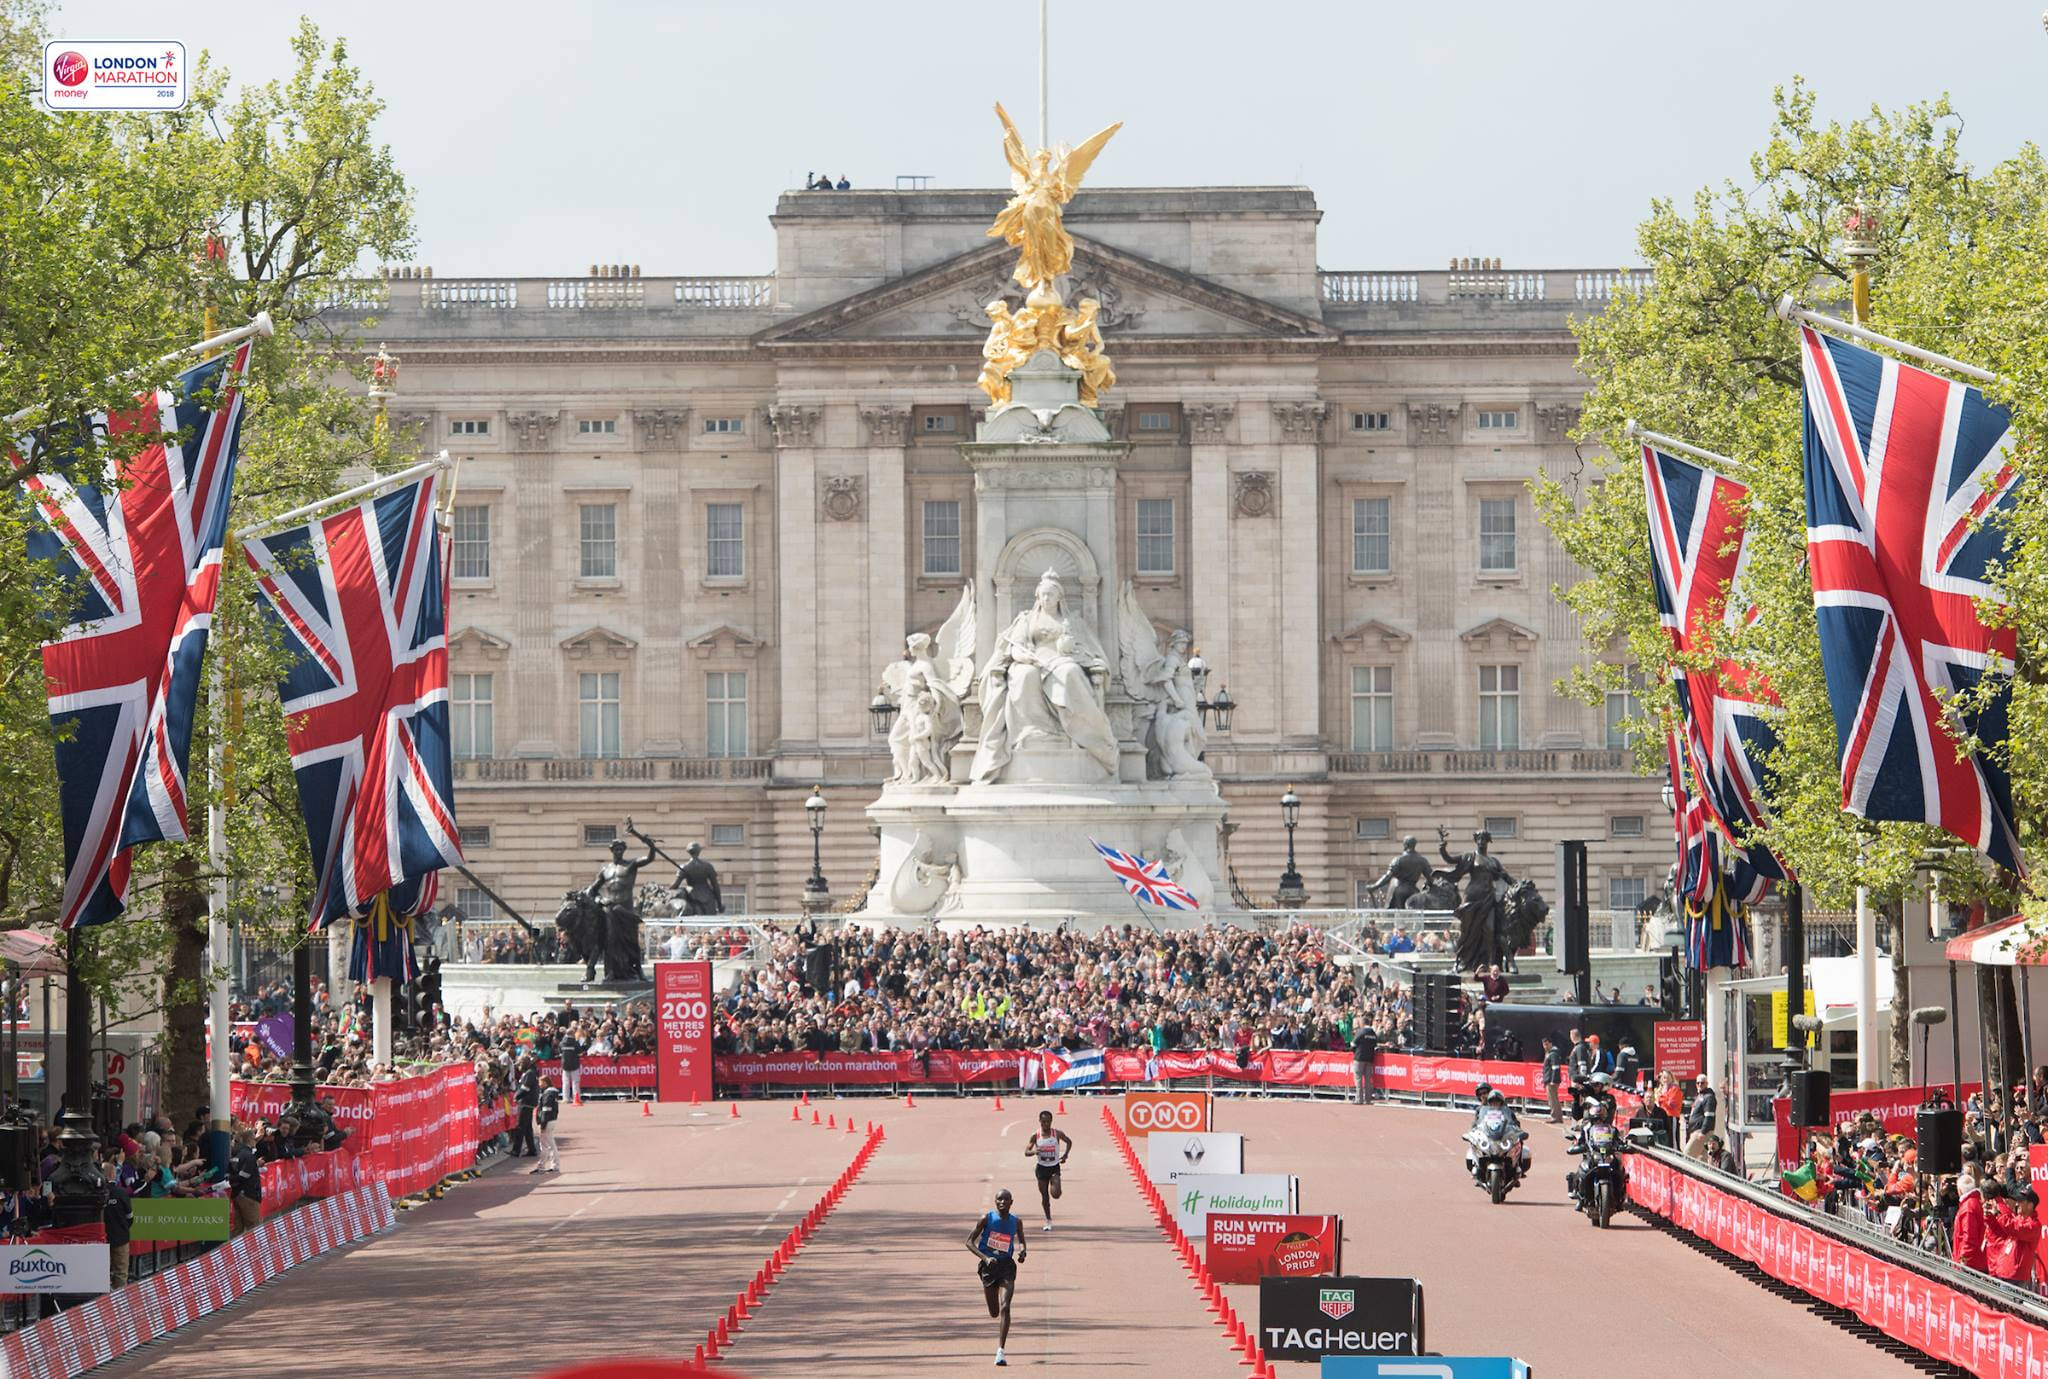 The London Marathon is a major international event